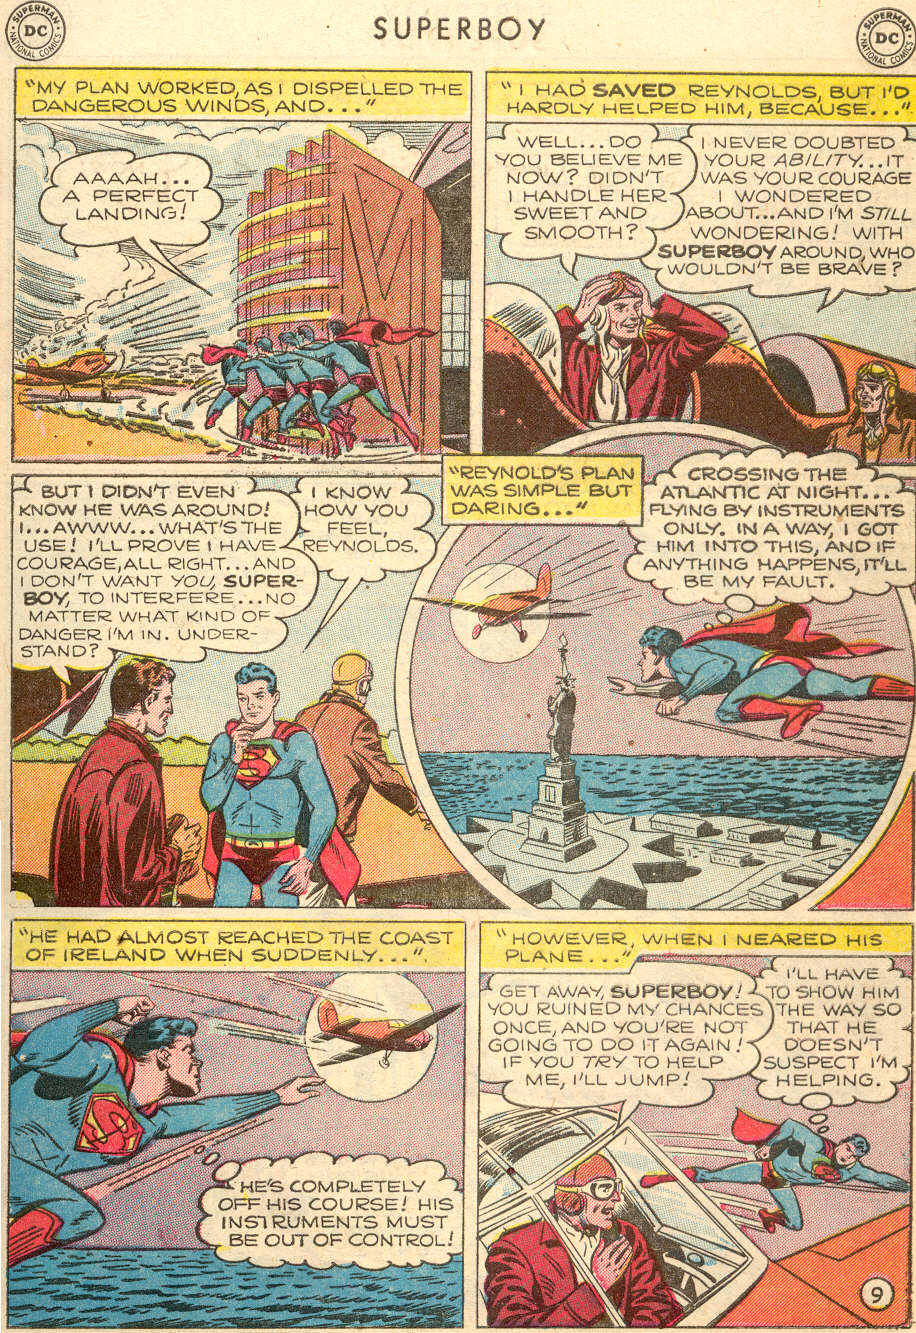 Superboy (1949) 16 Page 9